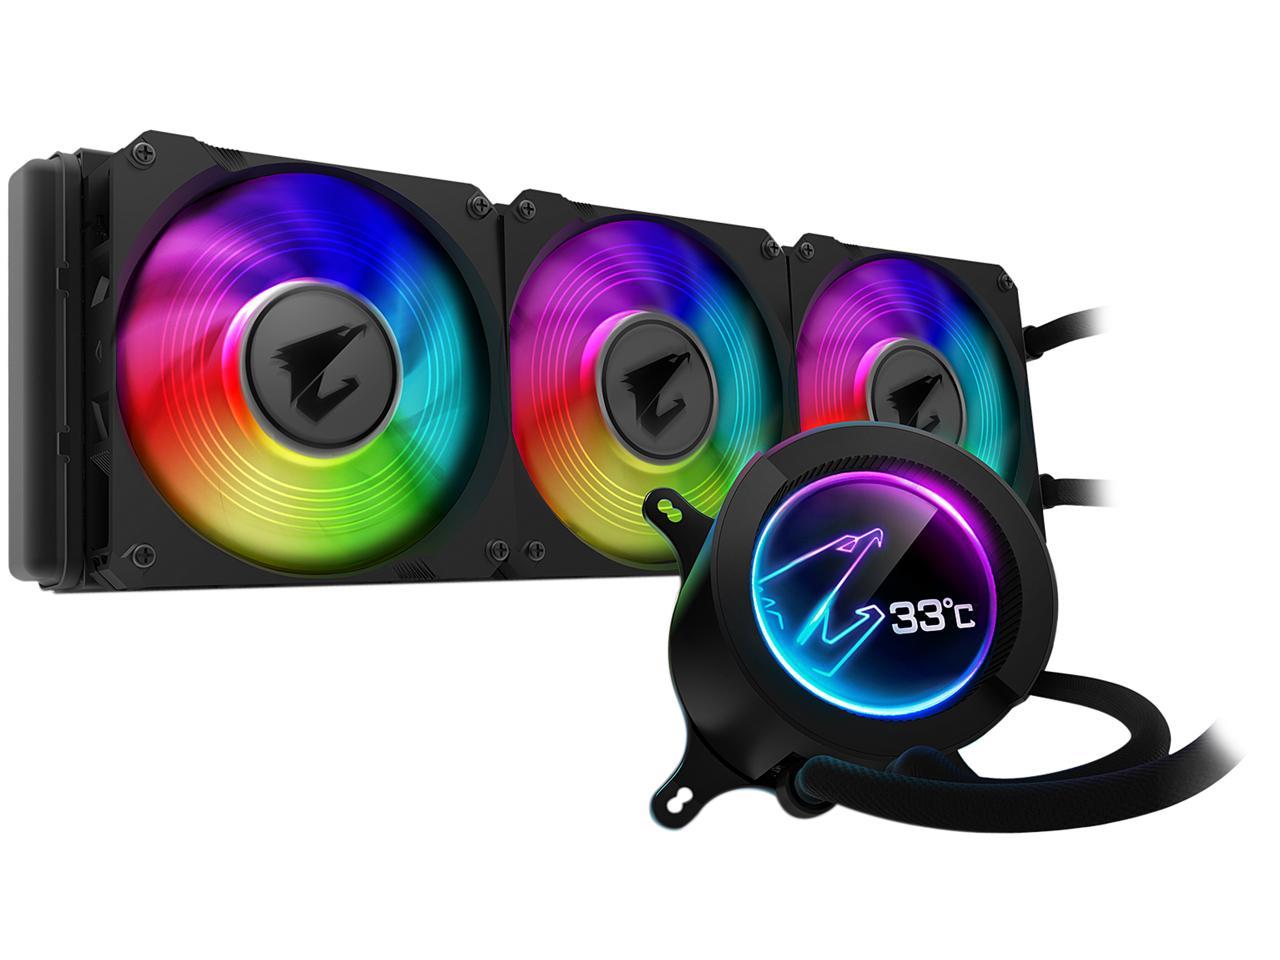 AORUS RGB Liquid Cooler 360 Windforce Radiator Triple 120mm 360mm PWM Fans Customizable Full Color LCD Display Advanced RGB Lighting and Control both AMD AM4, TR4 and Intel 115X/2066